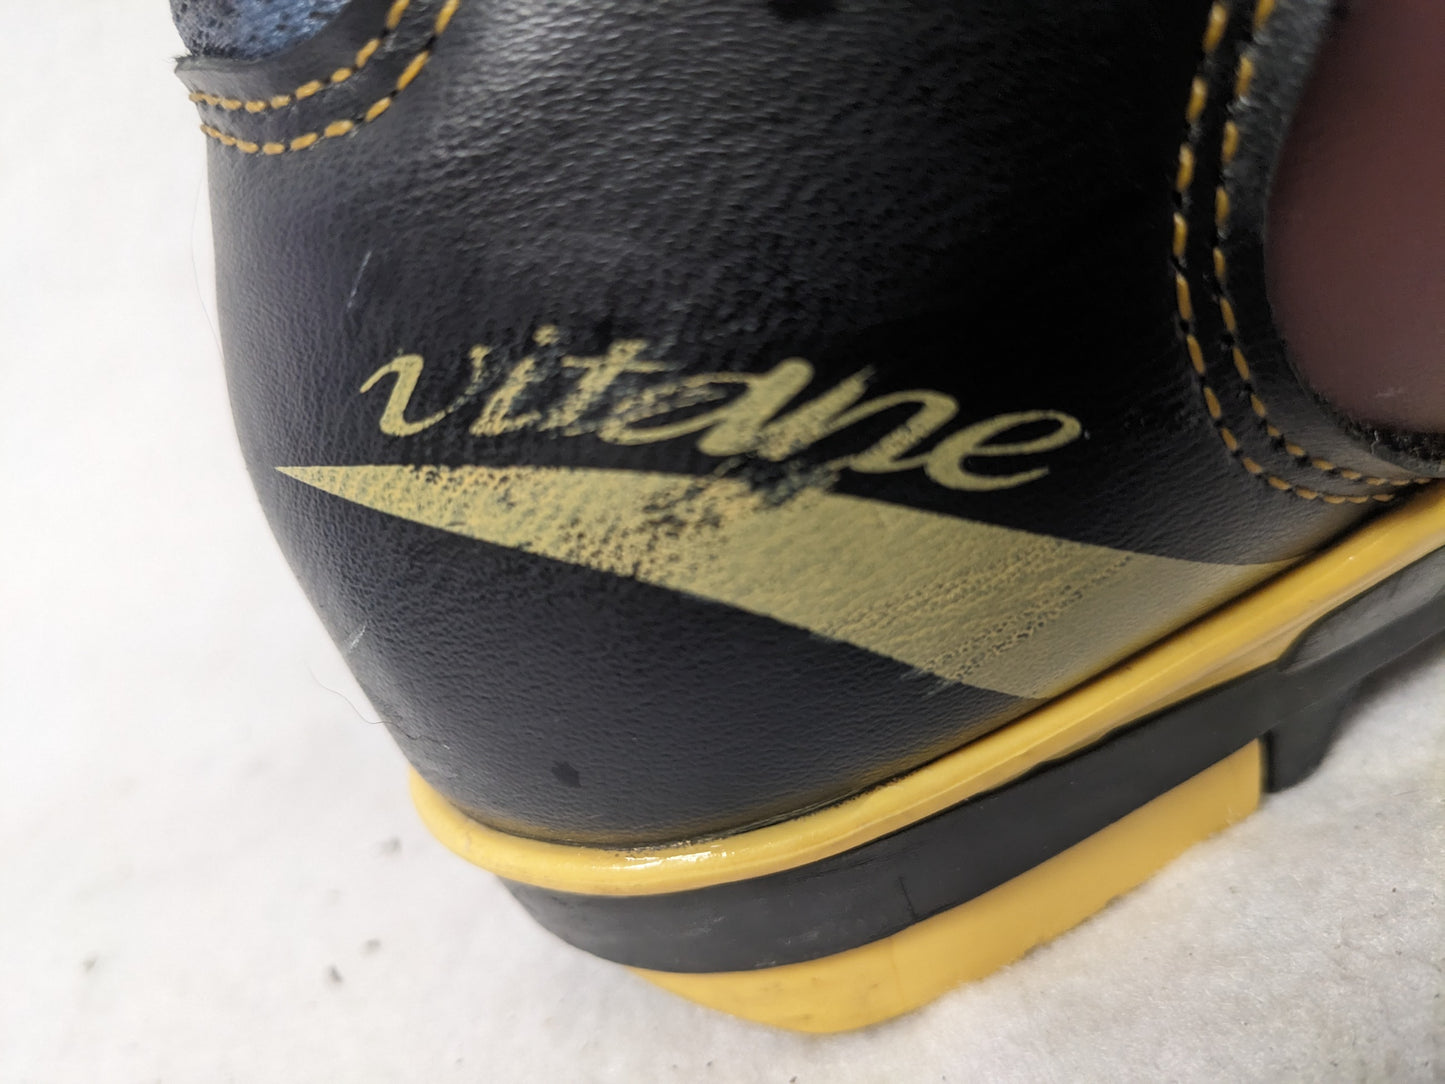 Salomon Vitane Cross Country SNS Profil Ski Boots Size 22 Color Maroon Condition Used